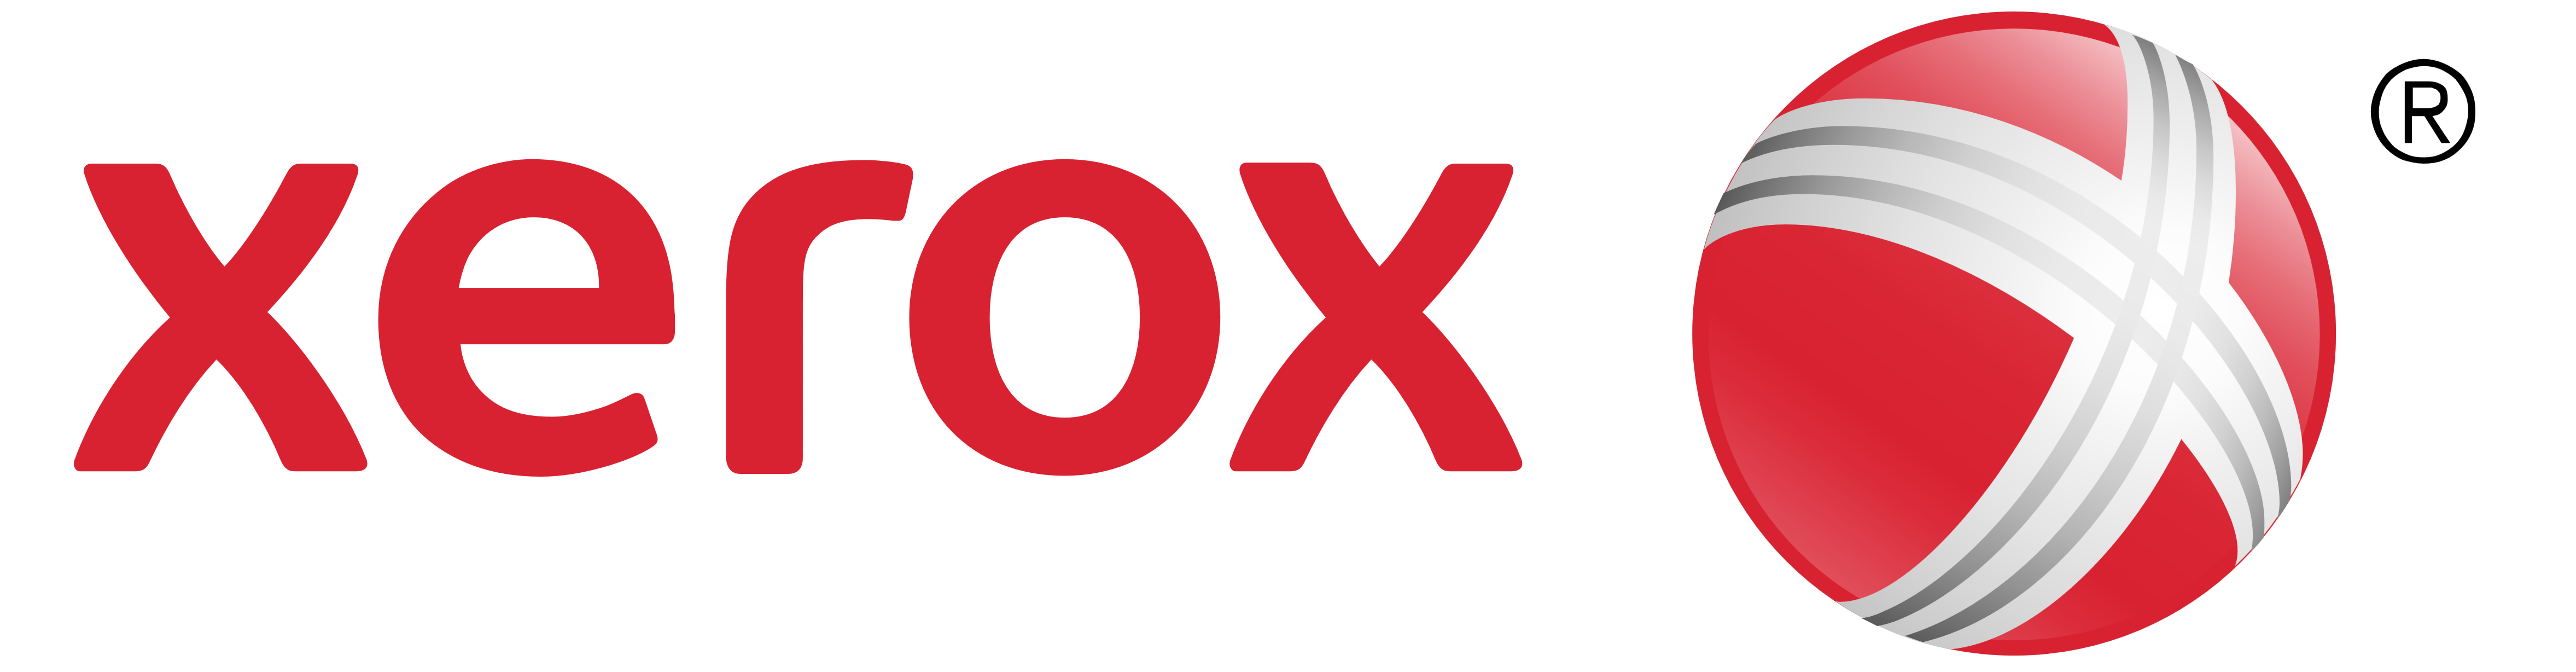 Xerox - logo